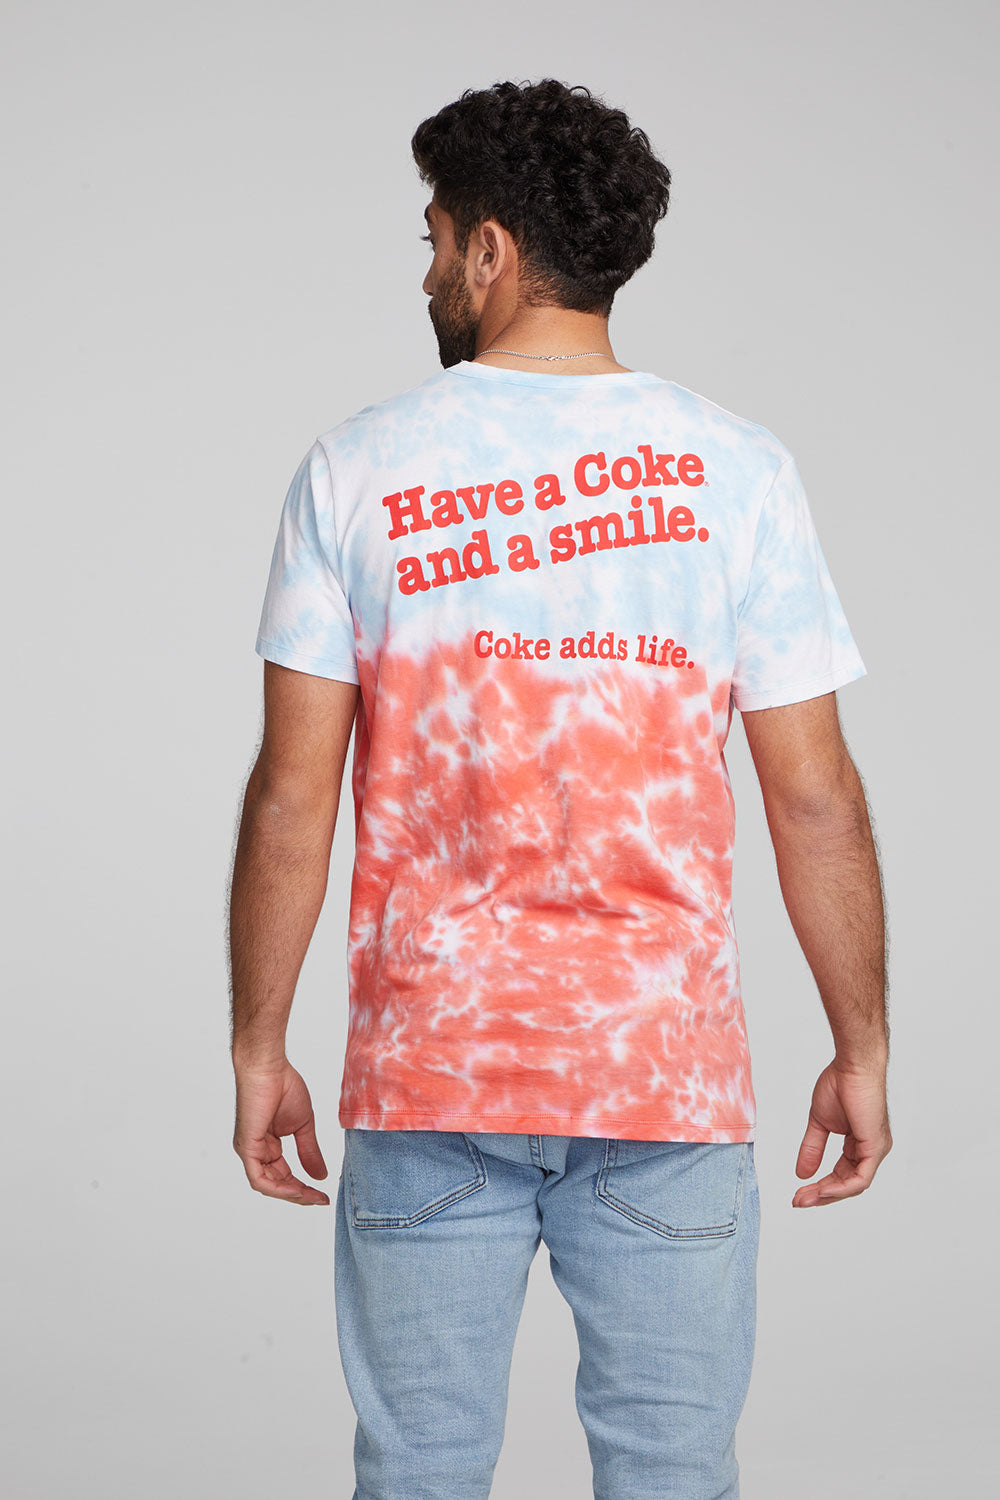 Coca-Cola Tie Dye Smile Crew Neck Tee MENS chaserbrand